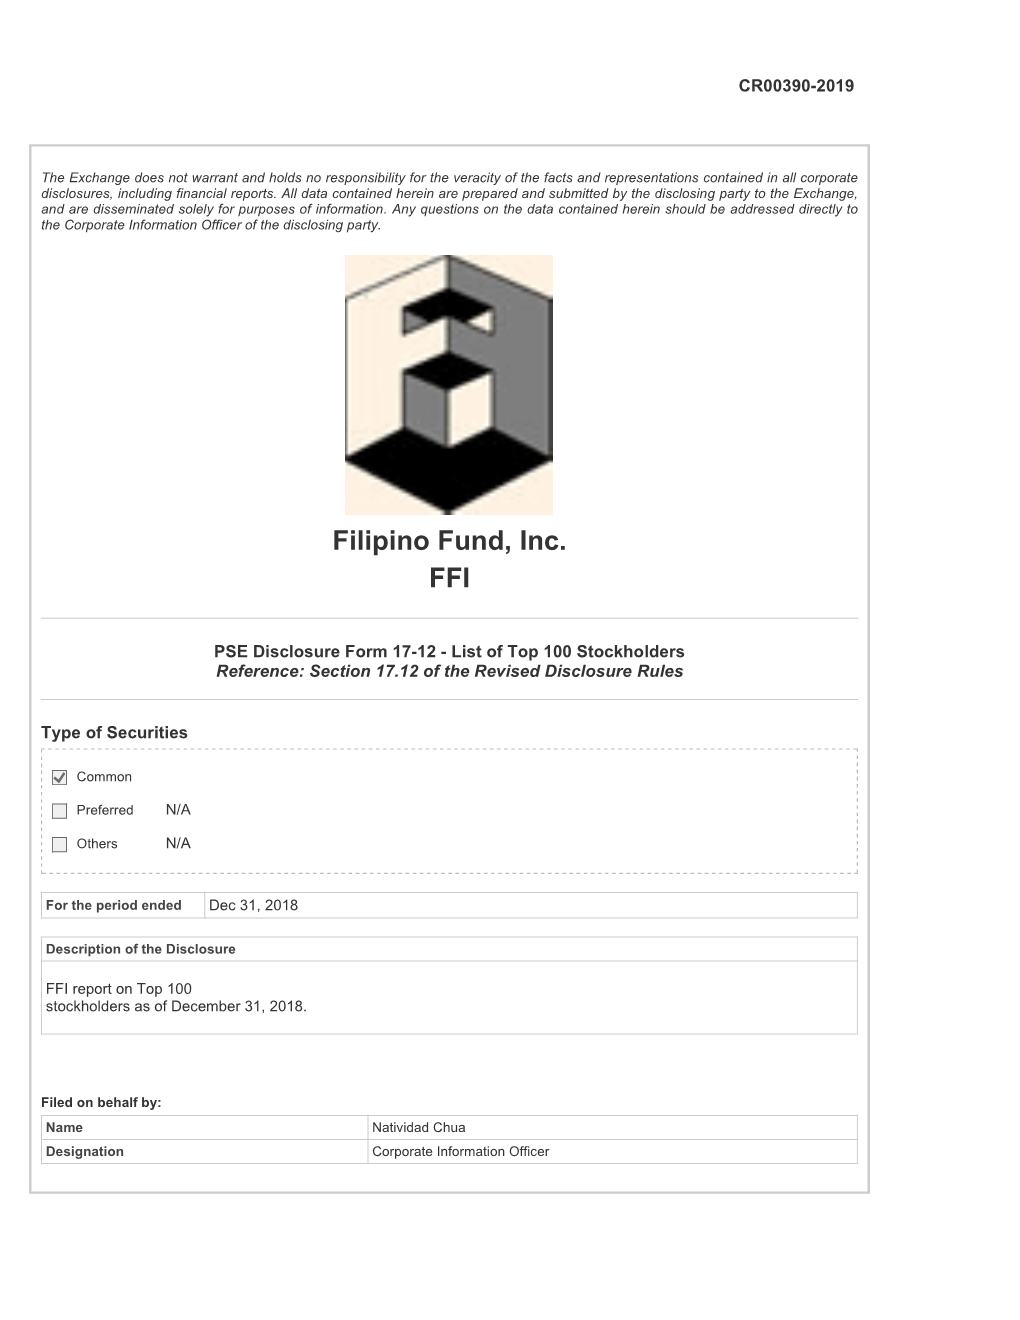 Filipino Fund, Inc. FFI